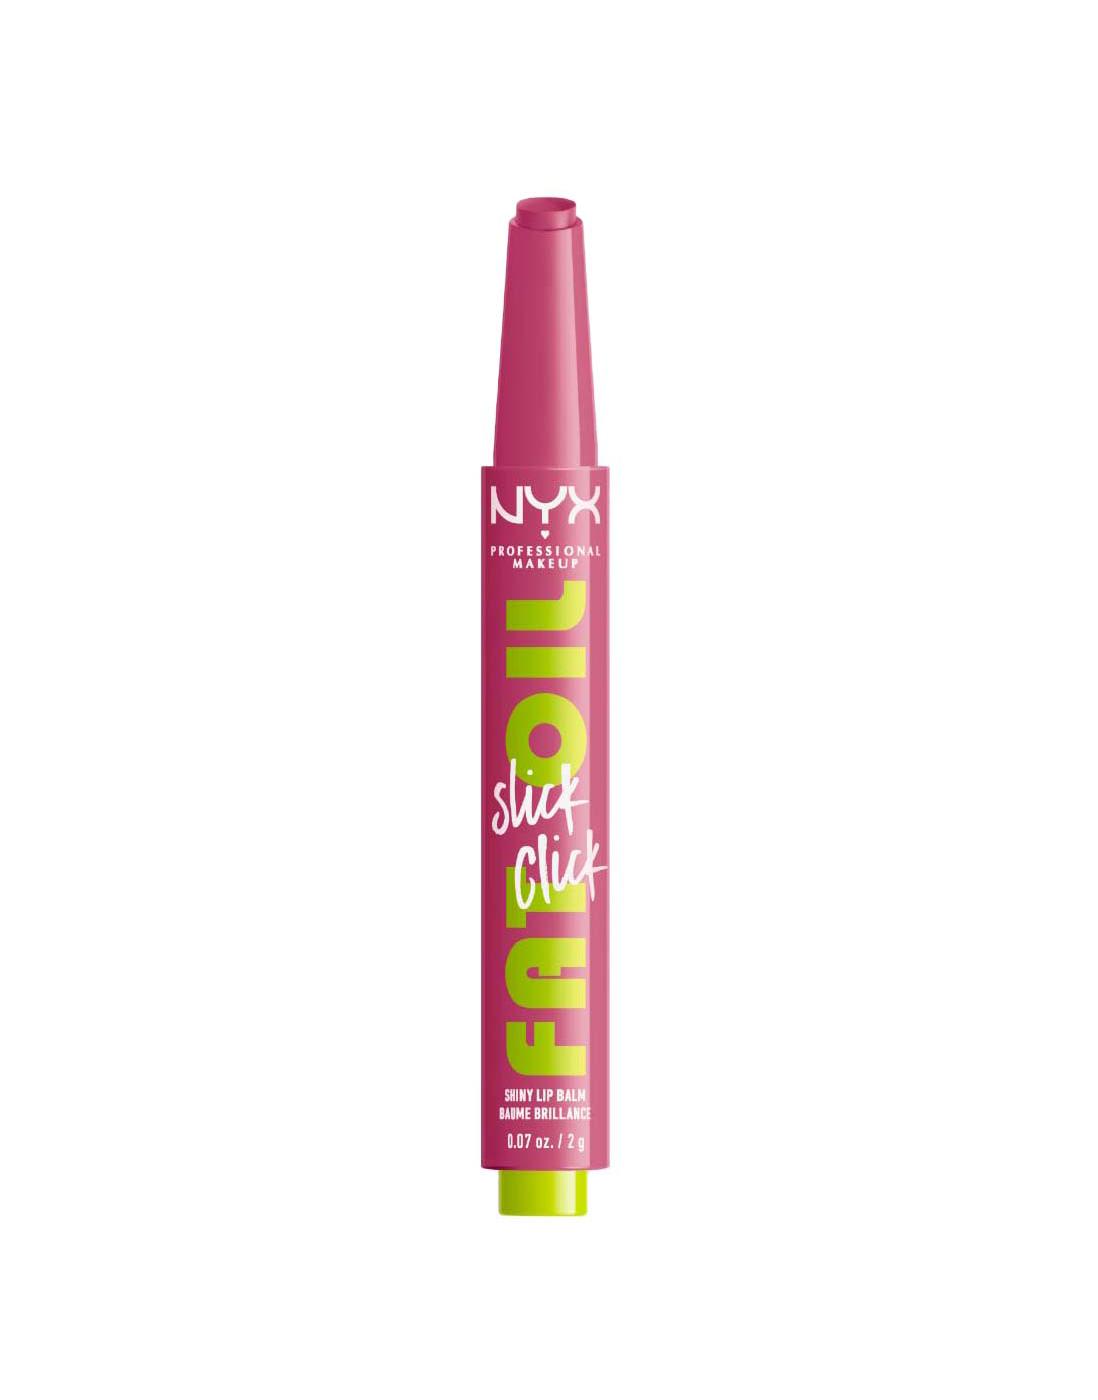 Nyx Fat Oil Slick Click Stick That S On That Shop Lipstick At H E B